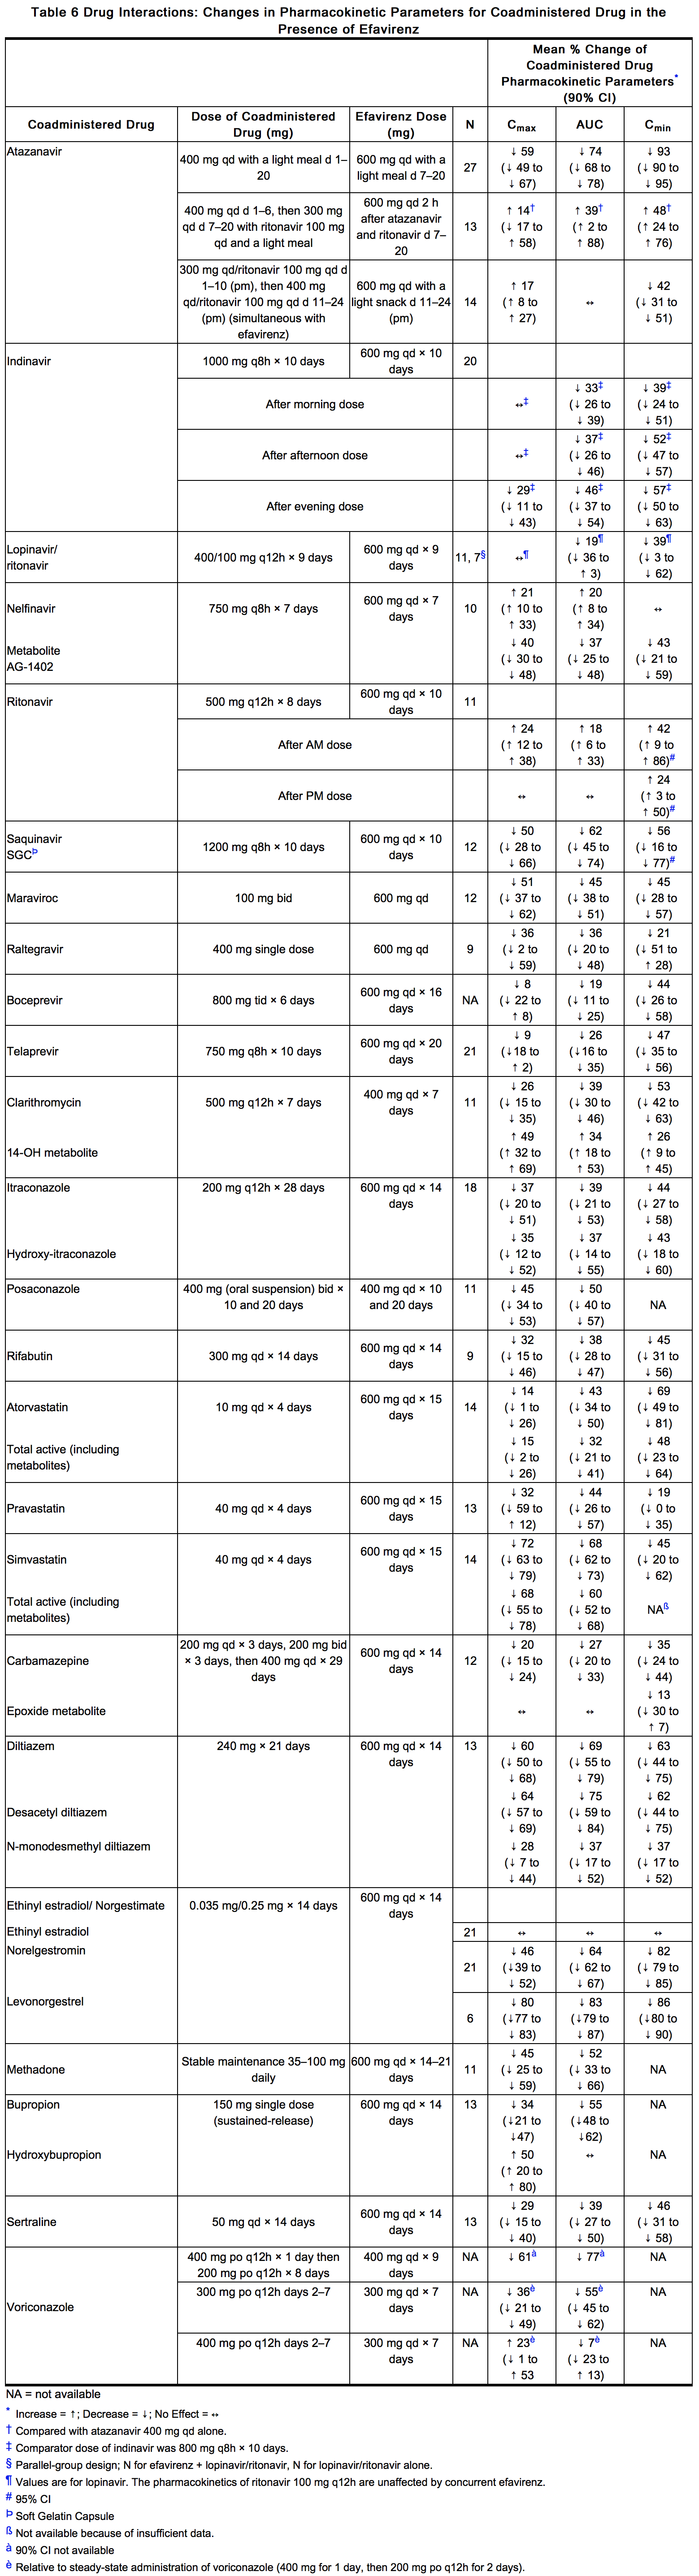 File:Efavirenz, emtricitabine, and tenofovir disoproxil fumarate Table6.png